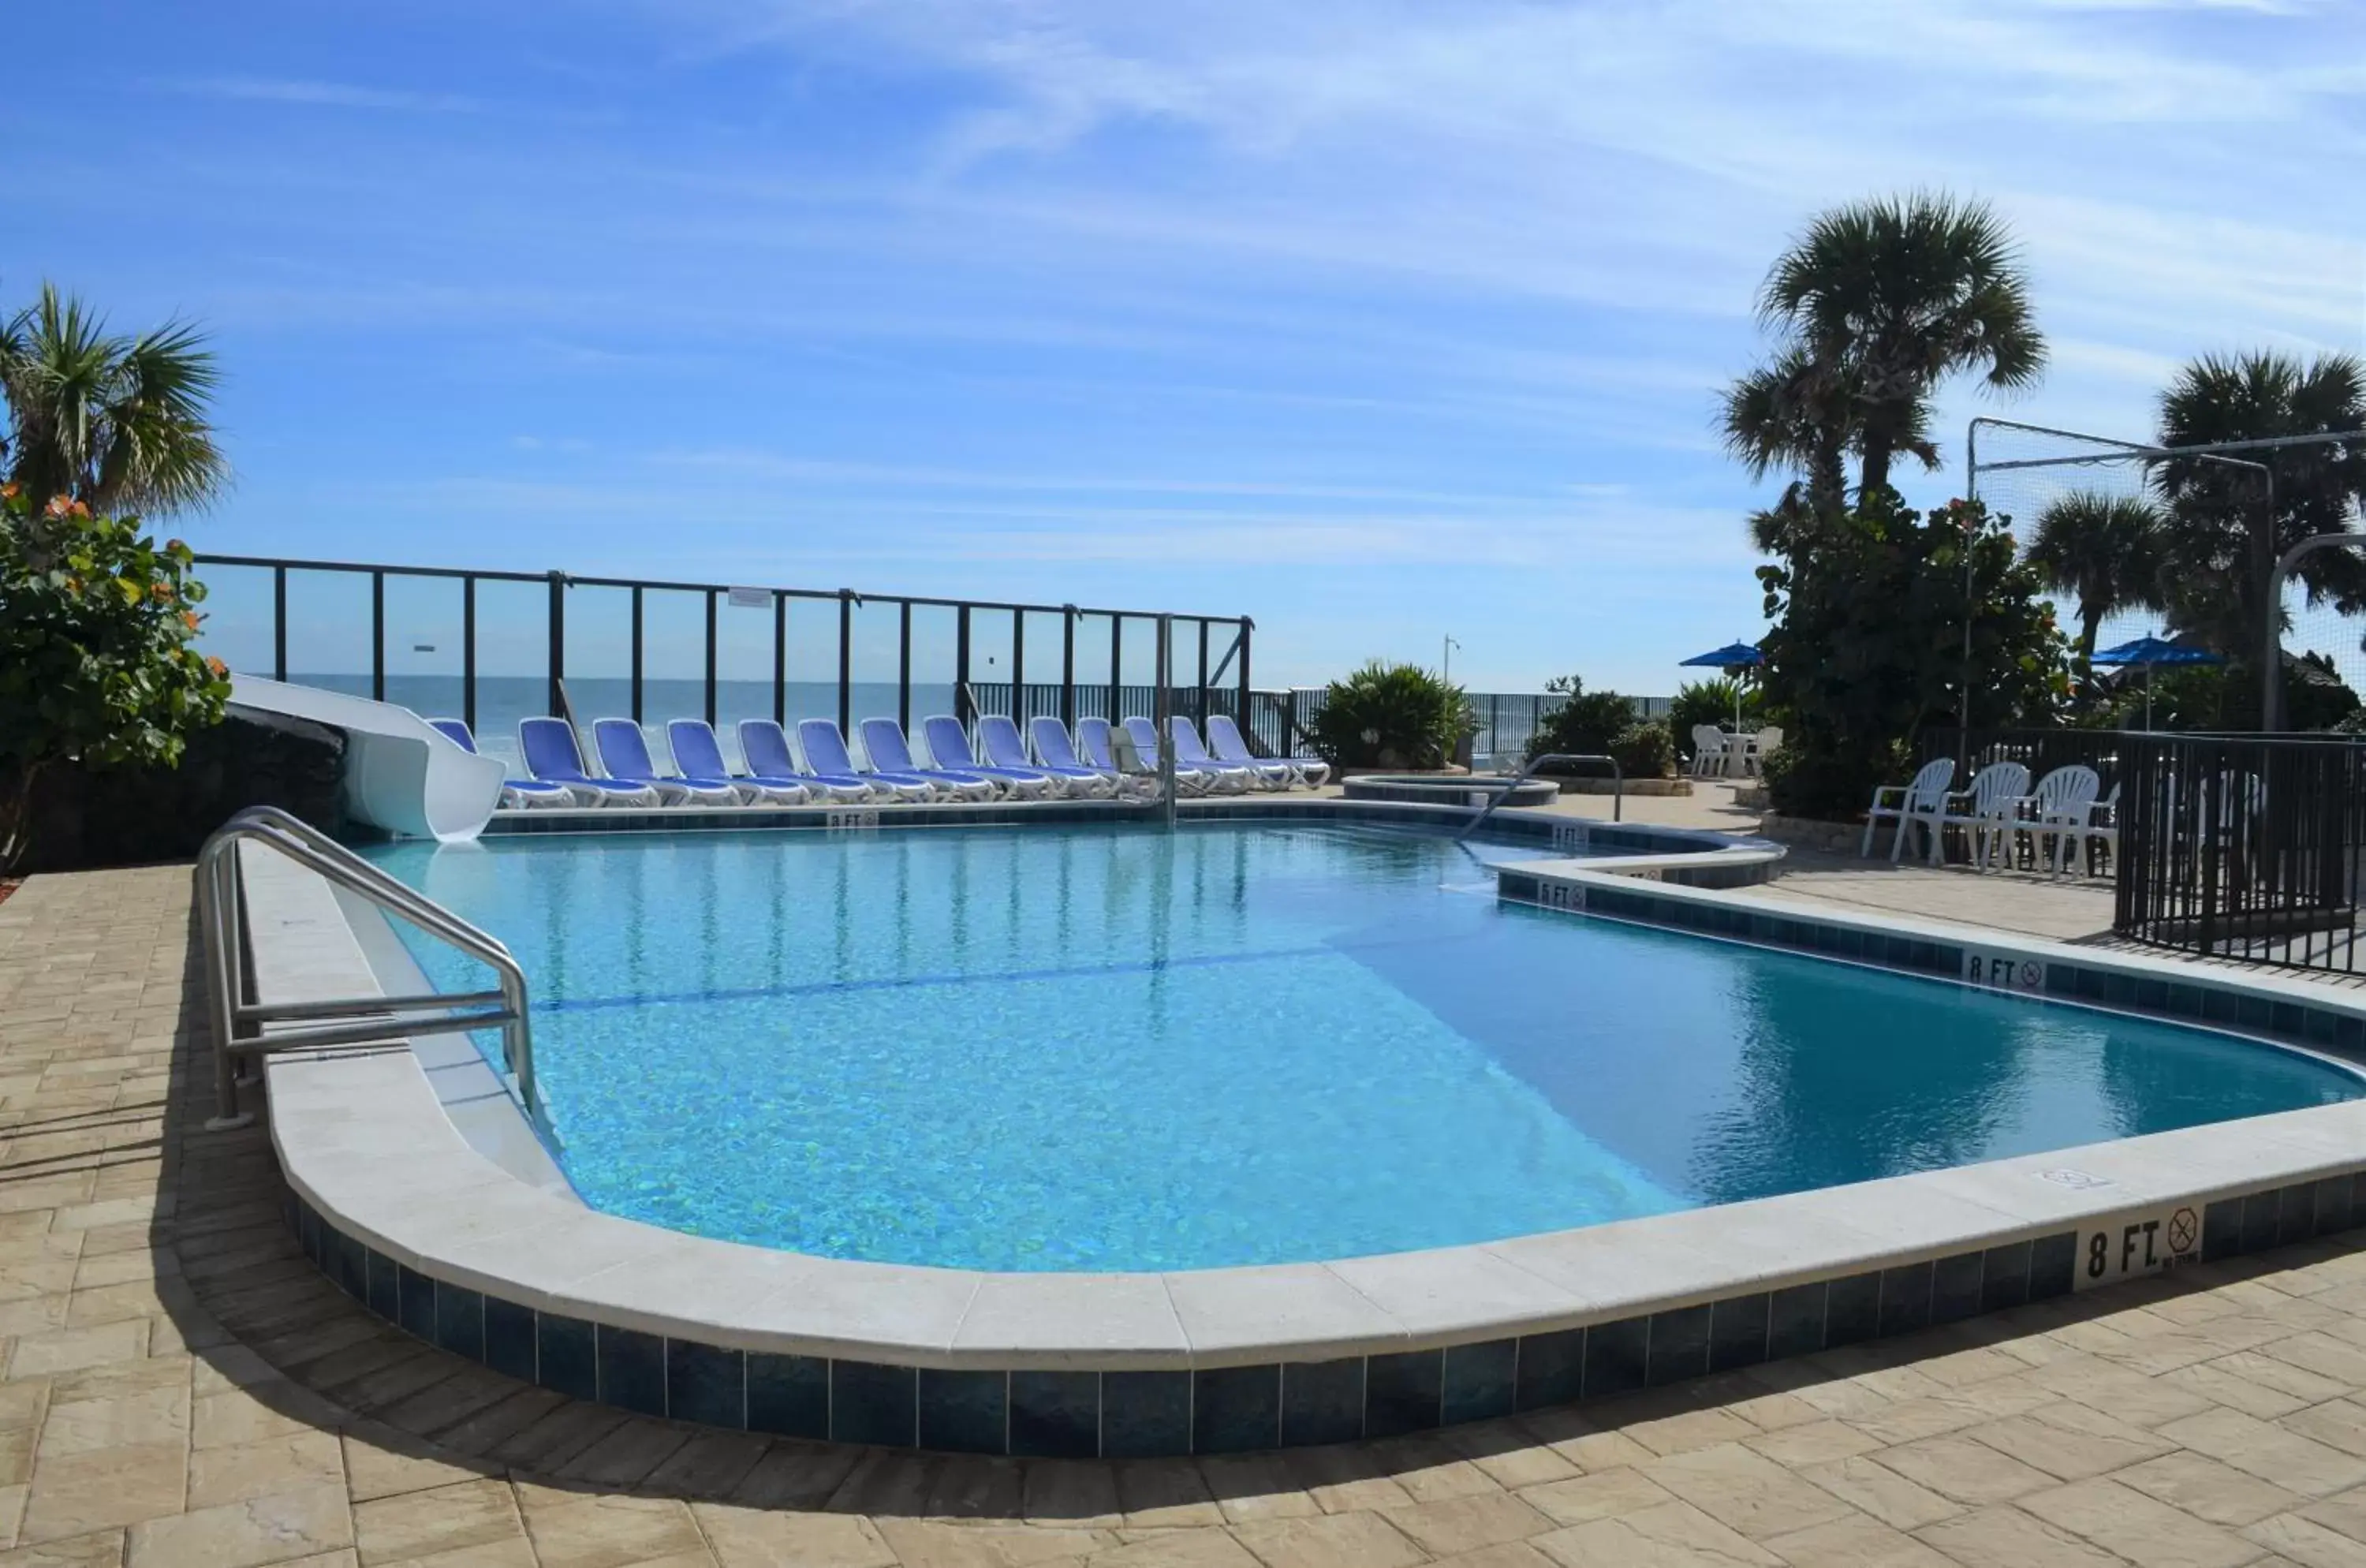 Swimming Pool in Sun Viking Lodge - Daytona Beach